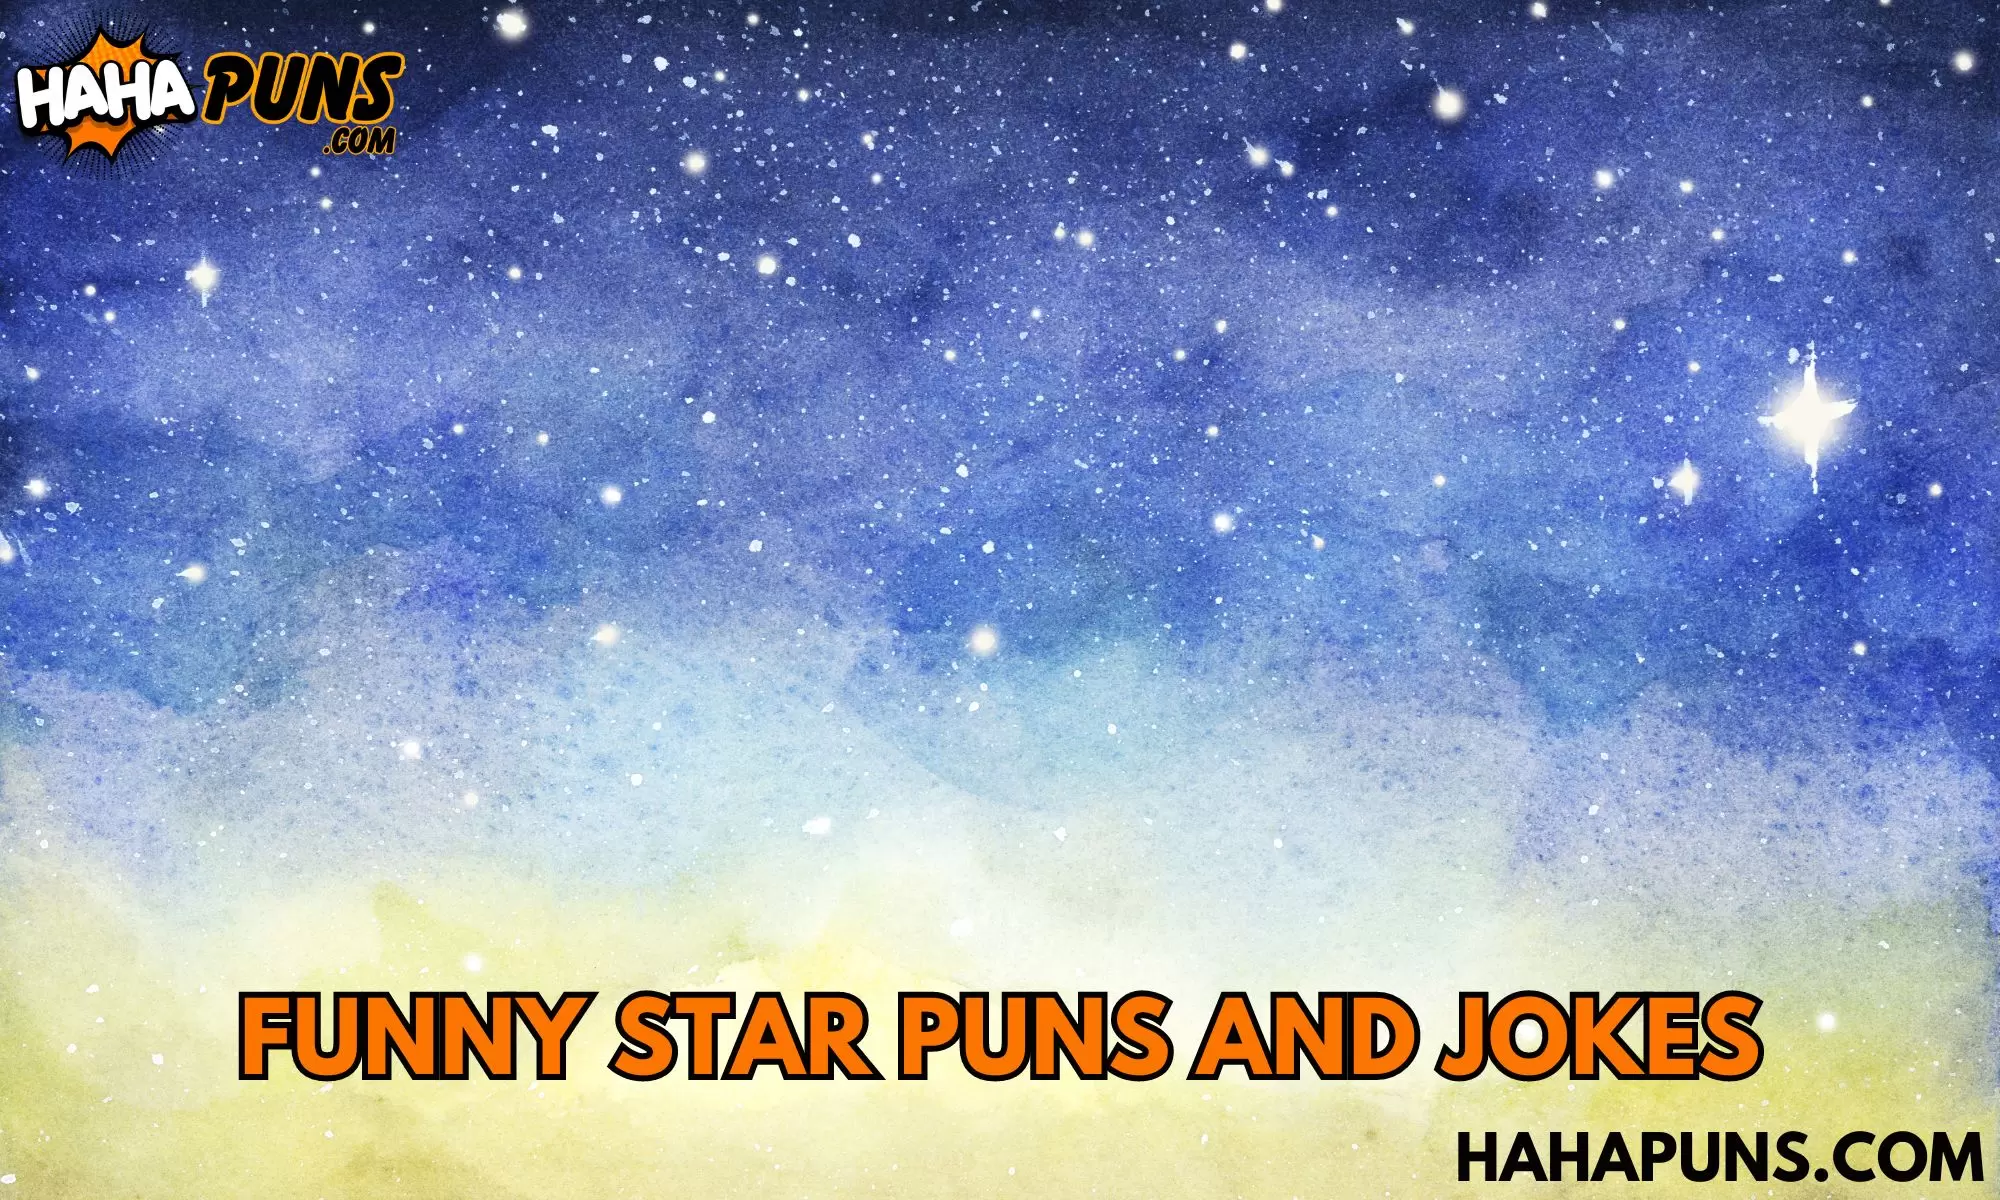 Funny Star Puns And Jokes